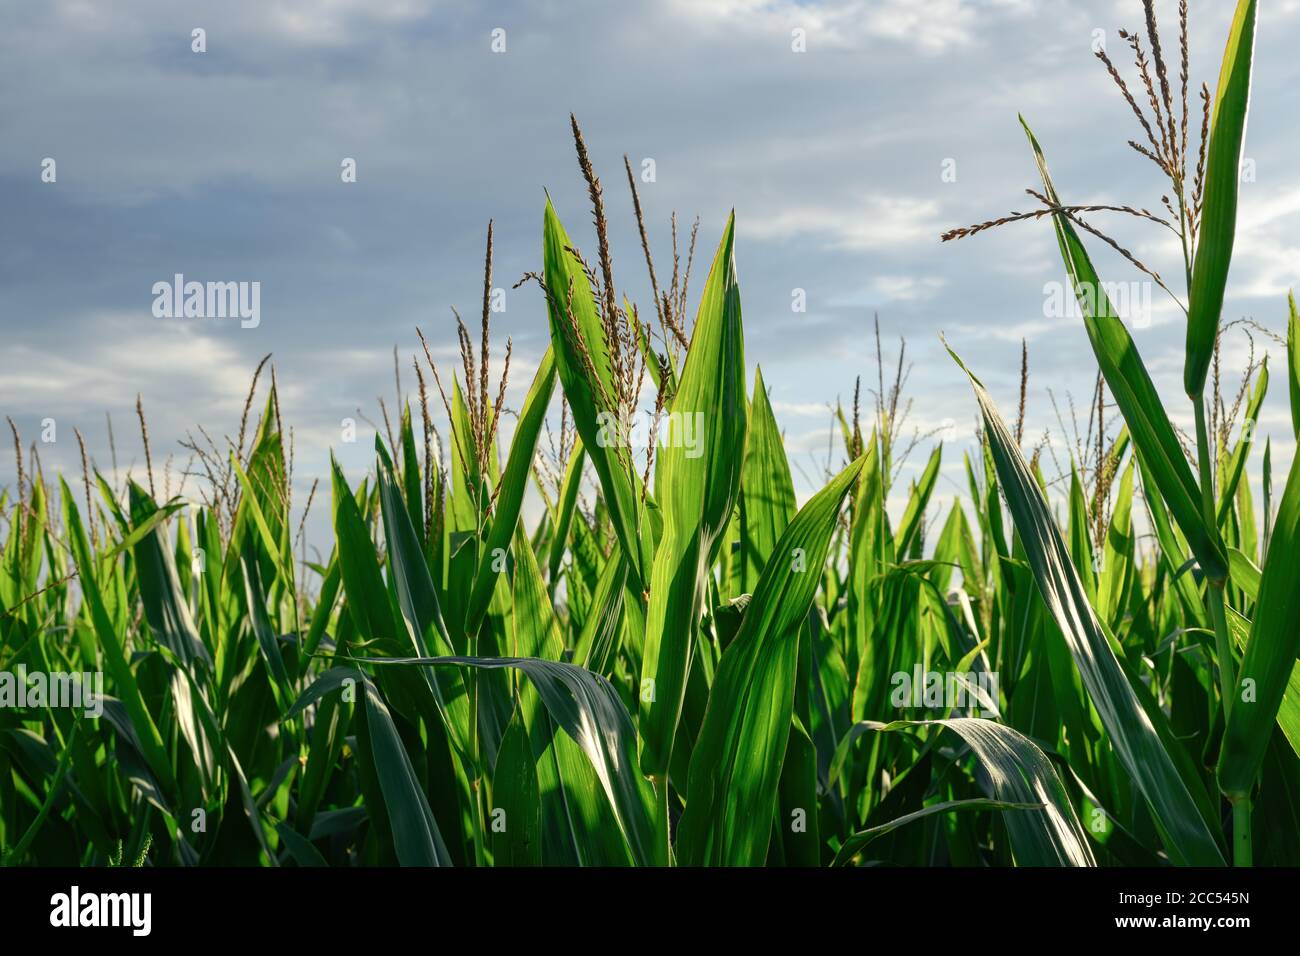 Corn stalks with tassel, growing organic maize crops Stock Photo